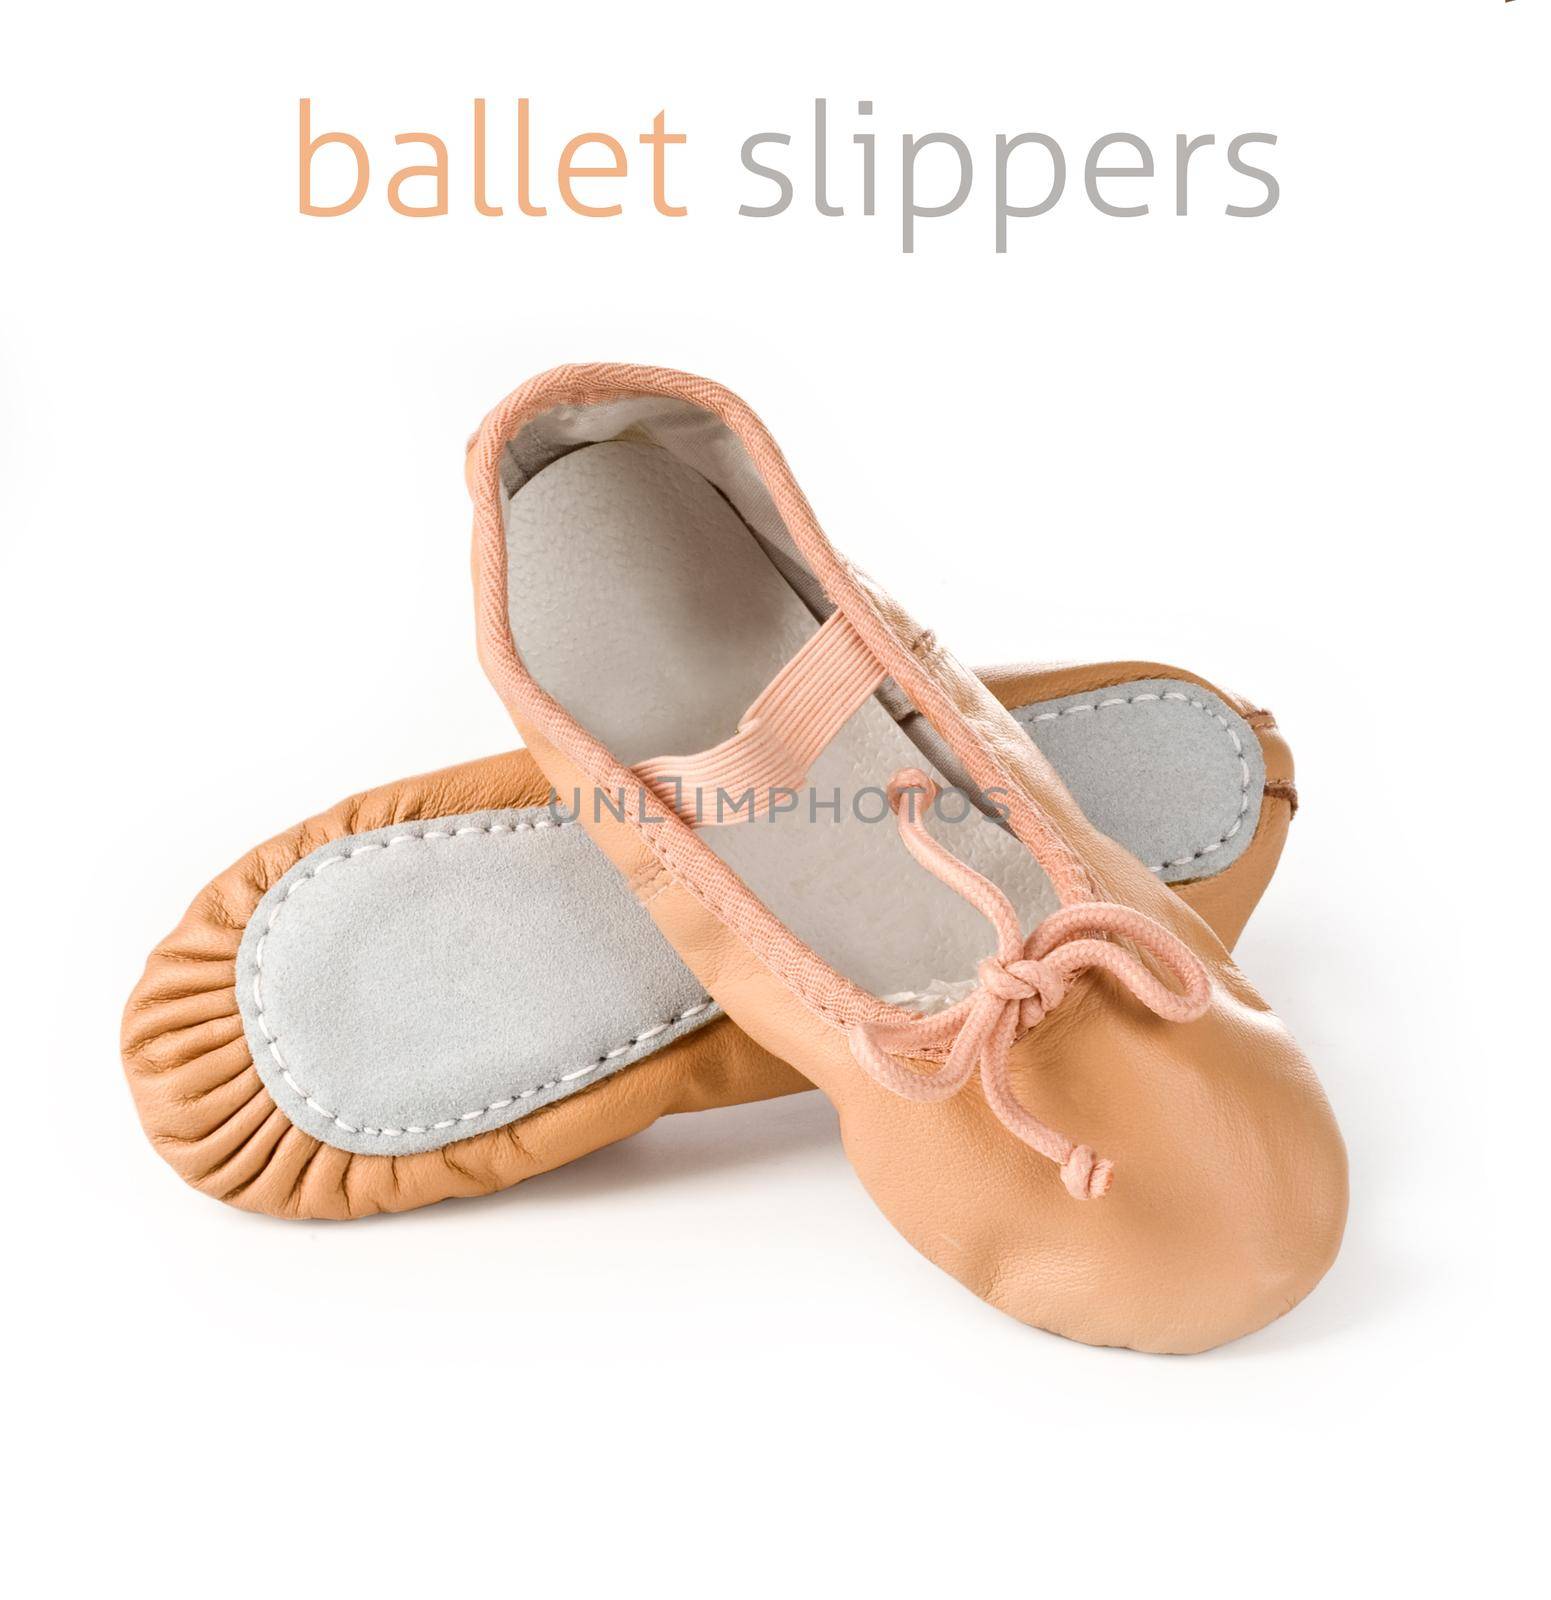 ballet slippers by kornienko